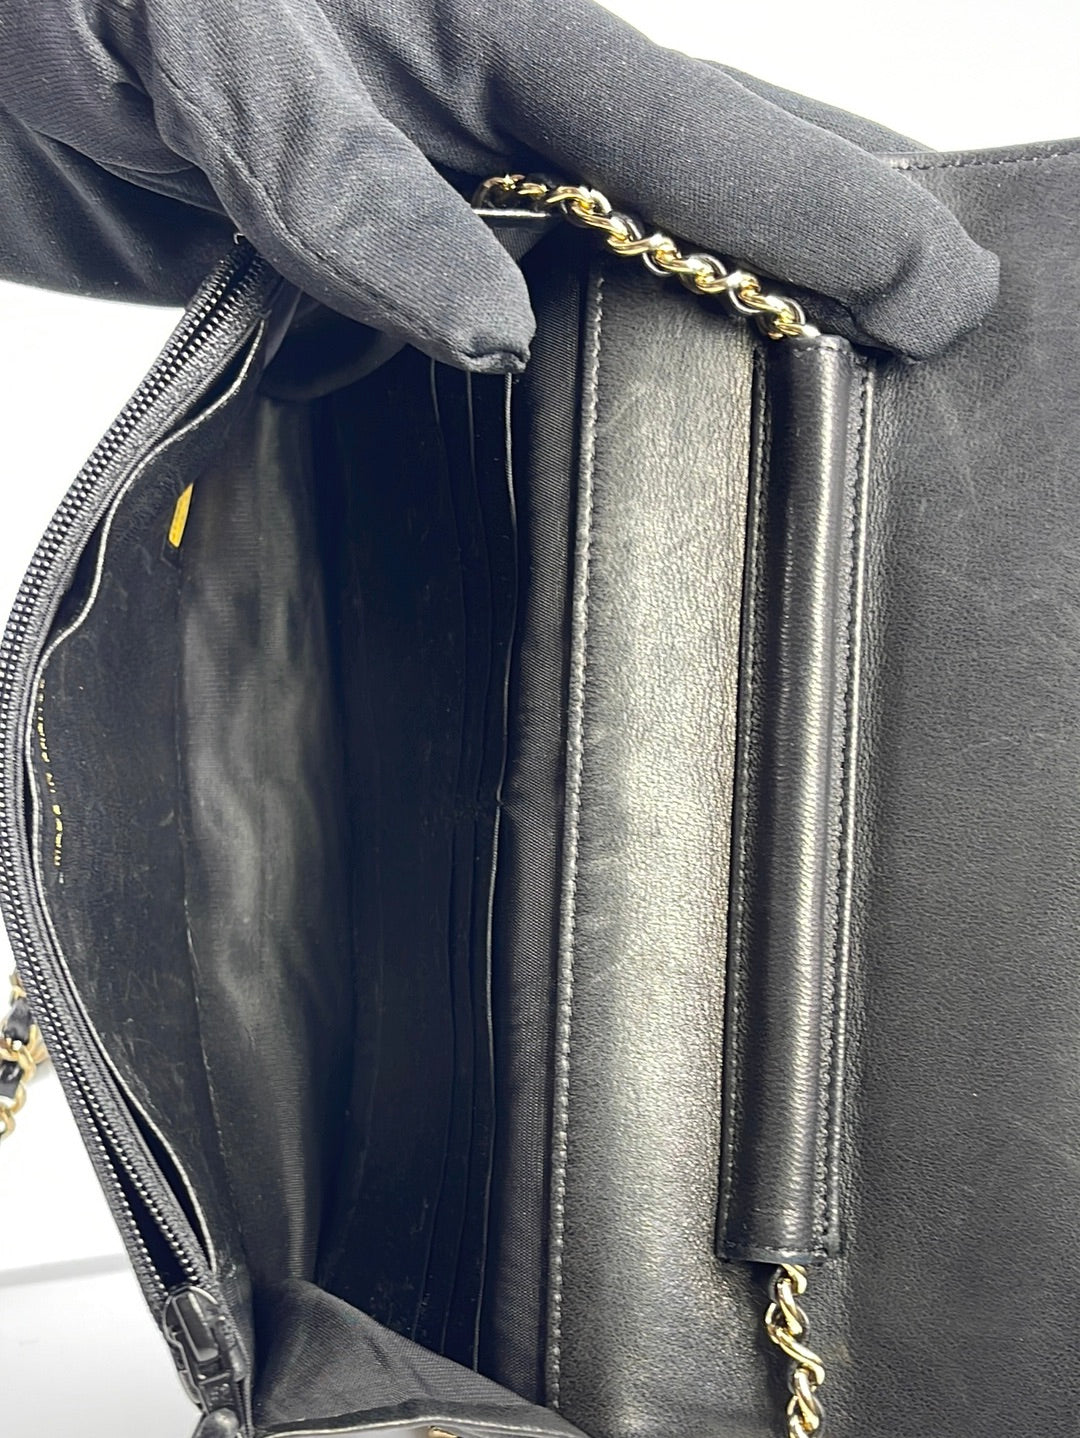 NTWRK - Preloved Chanel Black Caviar Timeless Wallet on Chain Bag